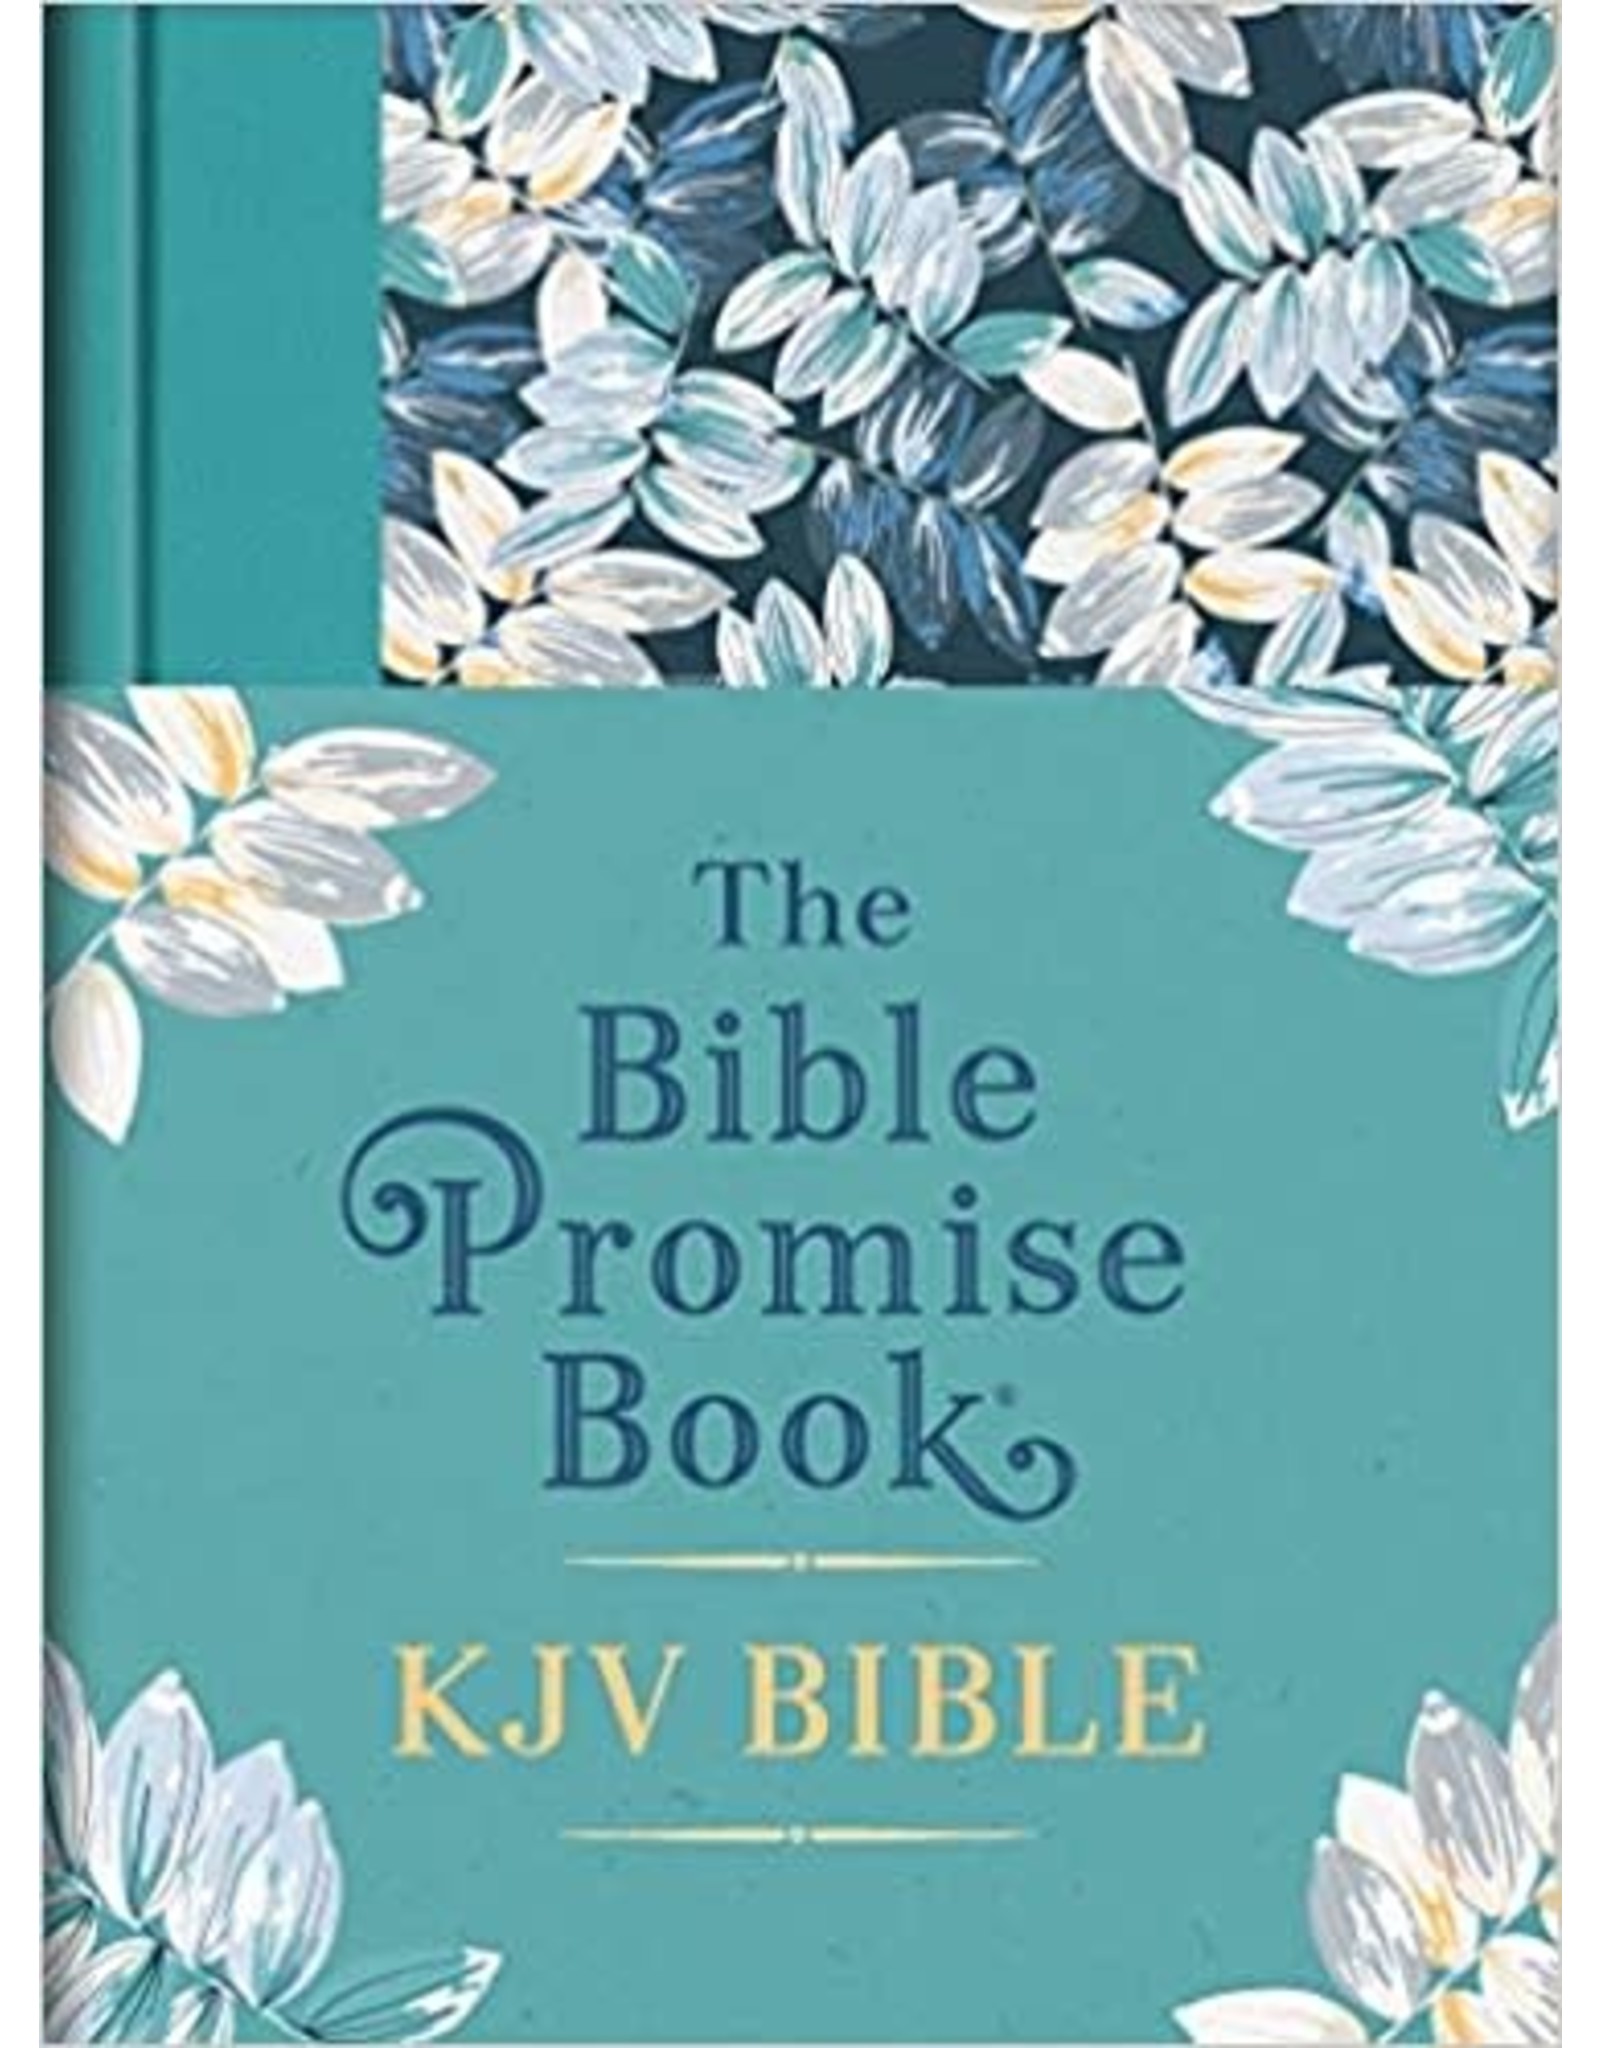 The Bible Promise Book, KJV Bible